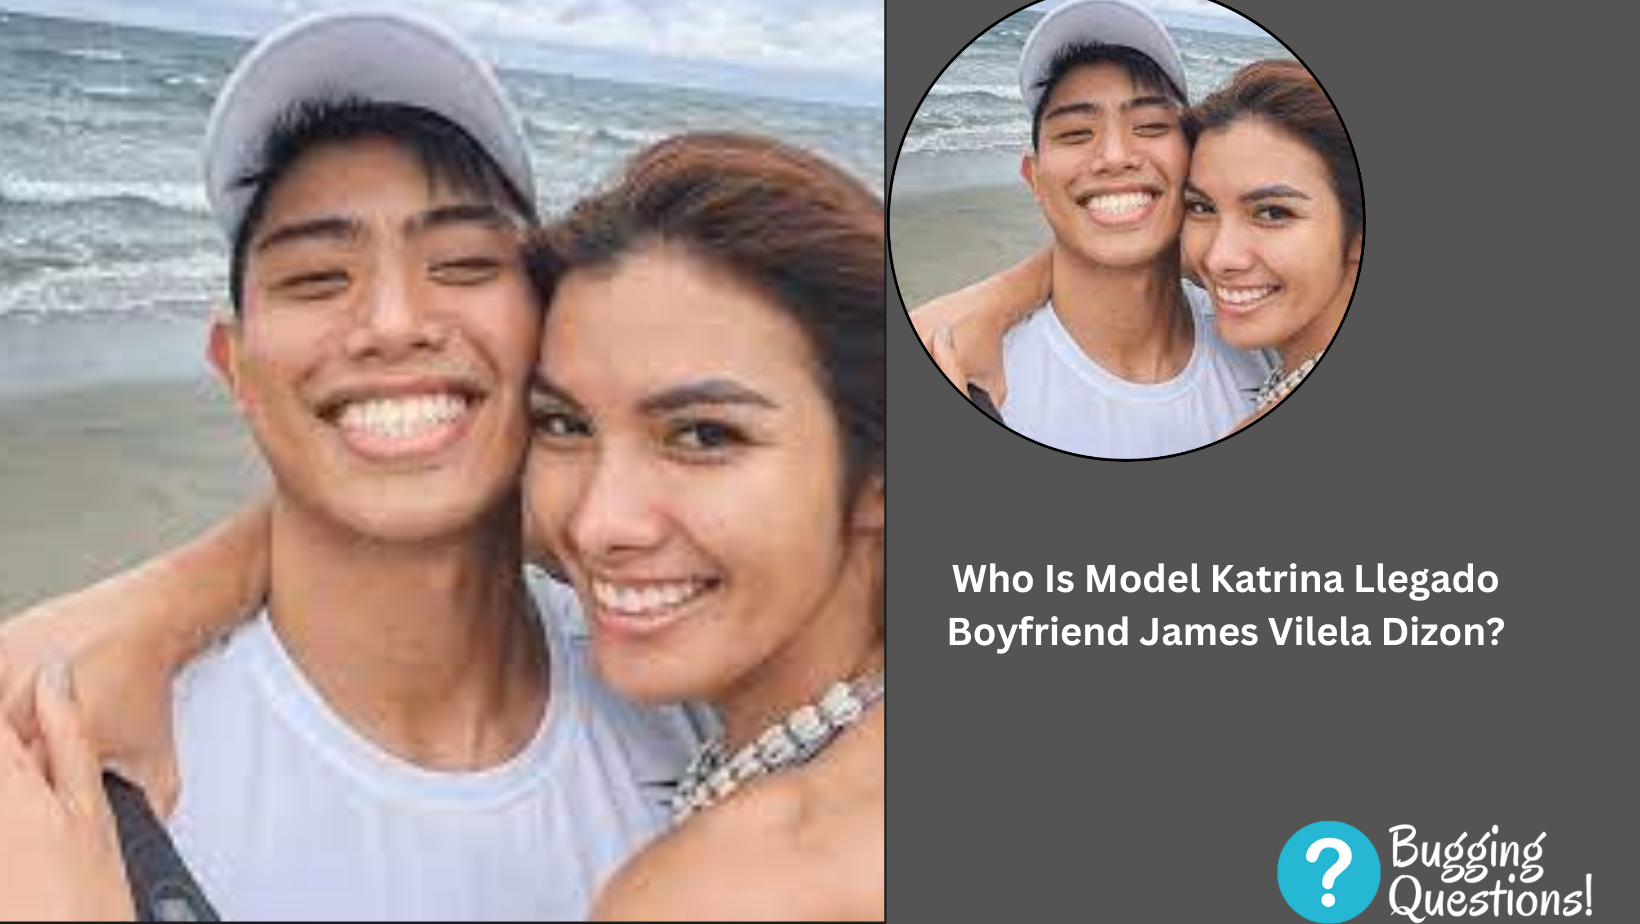 Who Is Model Katrina Llegado Boyfriend James Vilela Dizon?